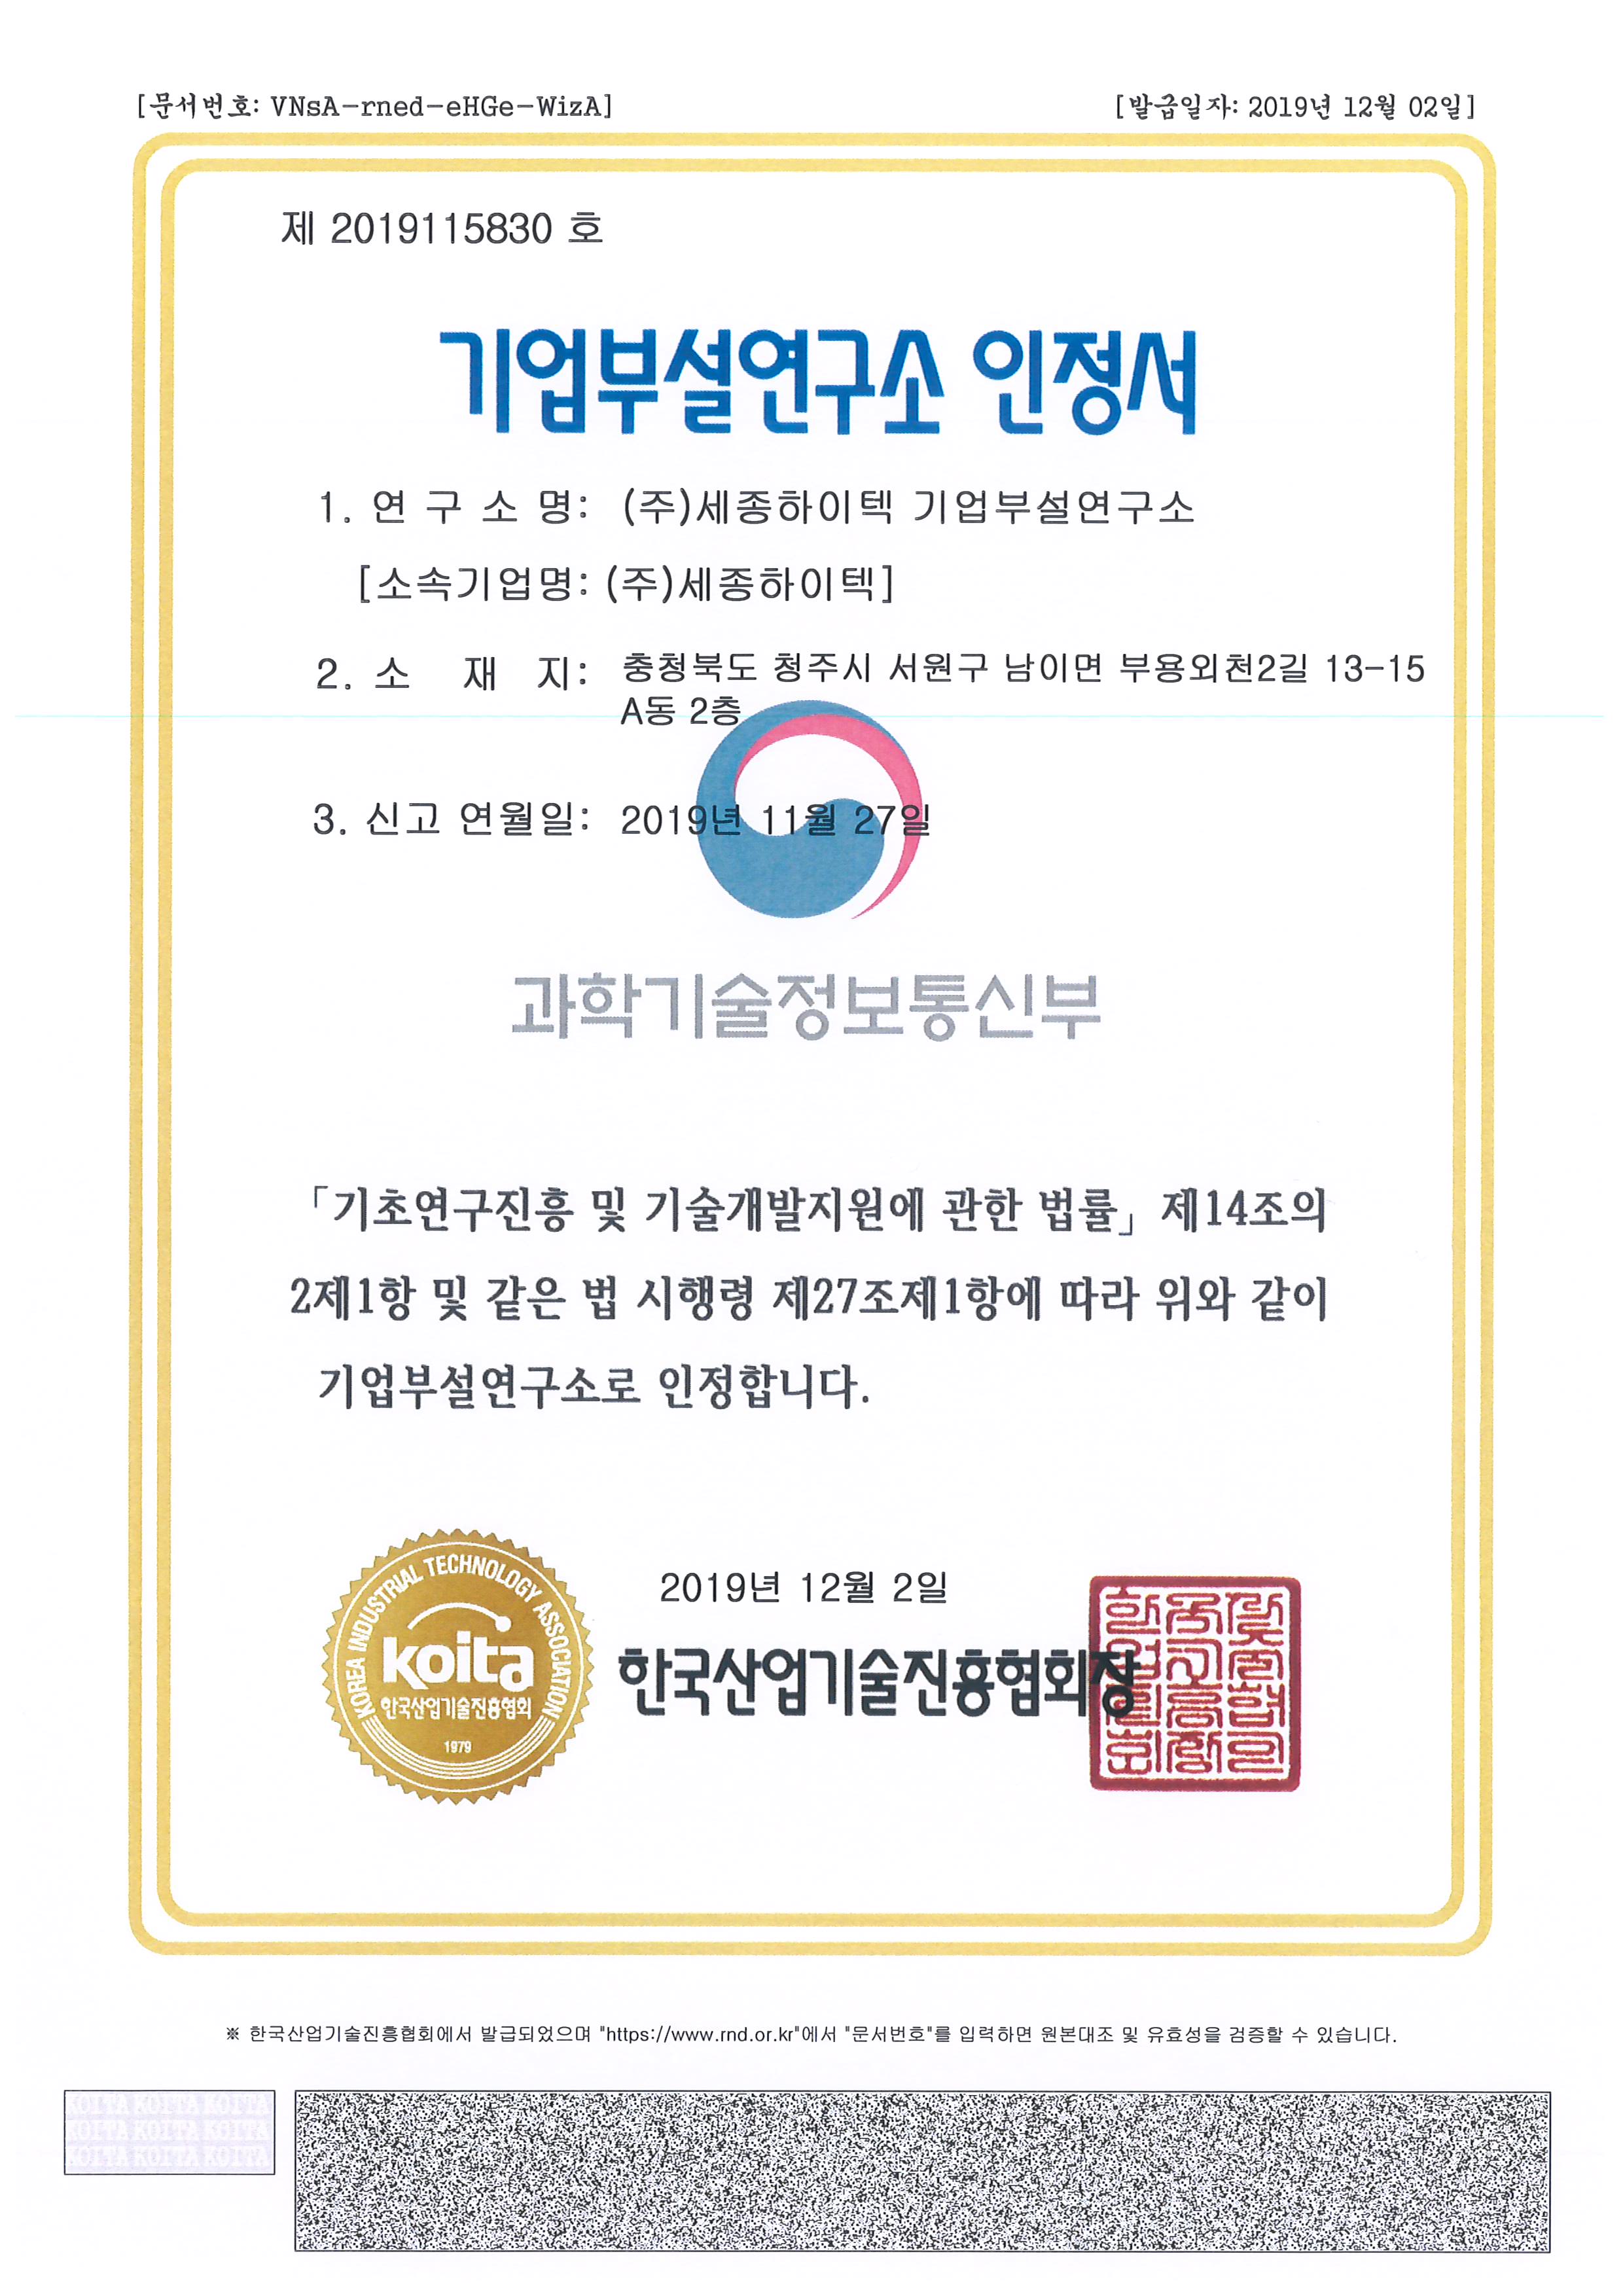 Certification-Certificate of company research institute [첨부 이미지1]